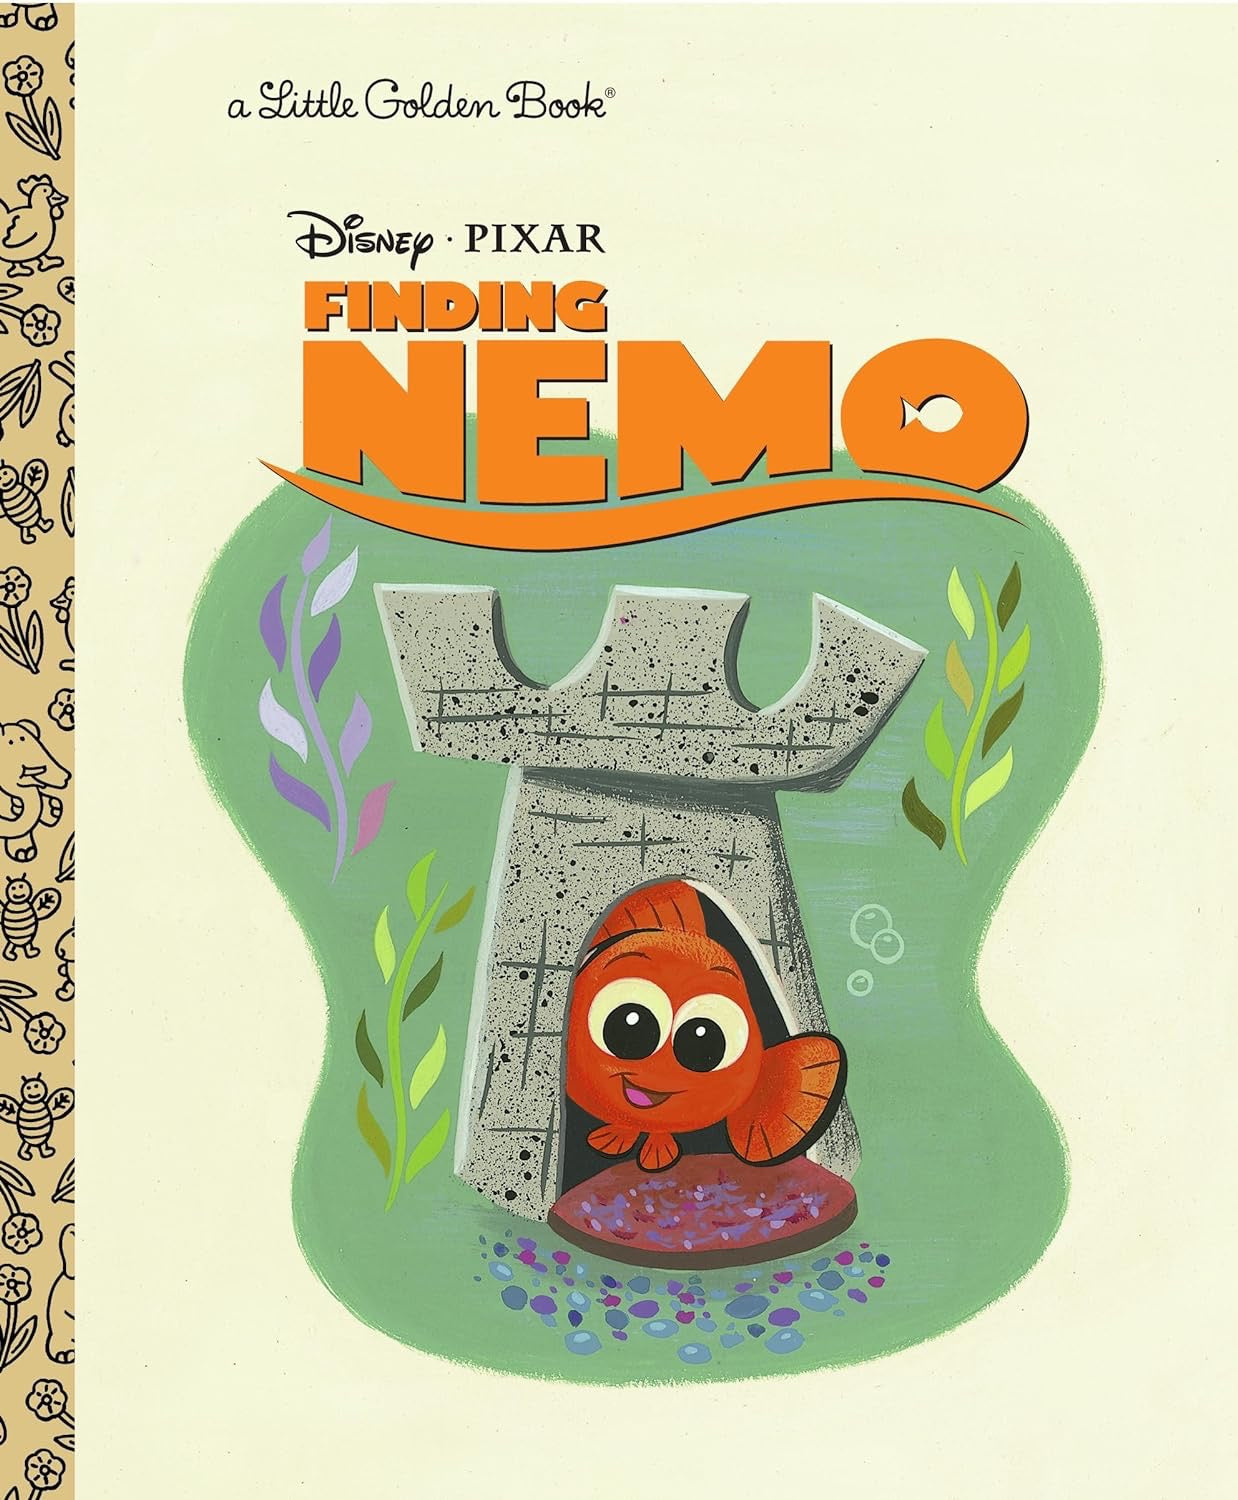 "Finding Nemo" Little Golden Book